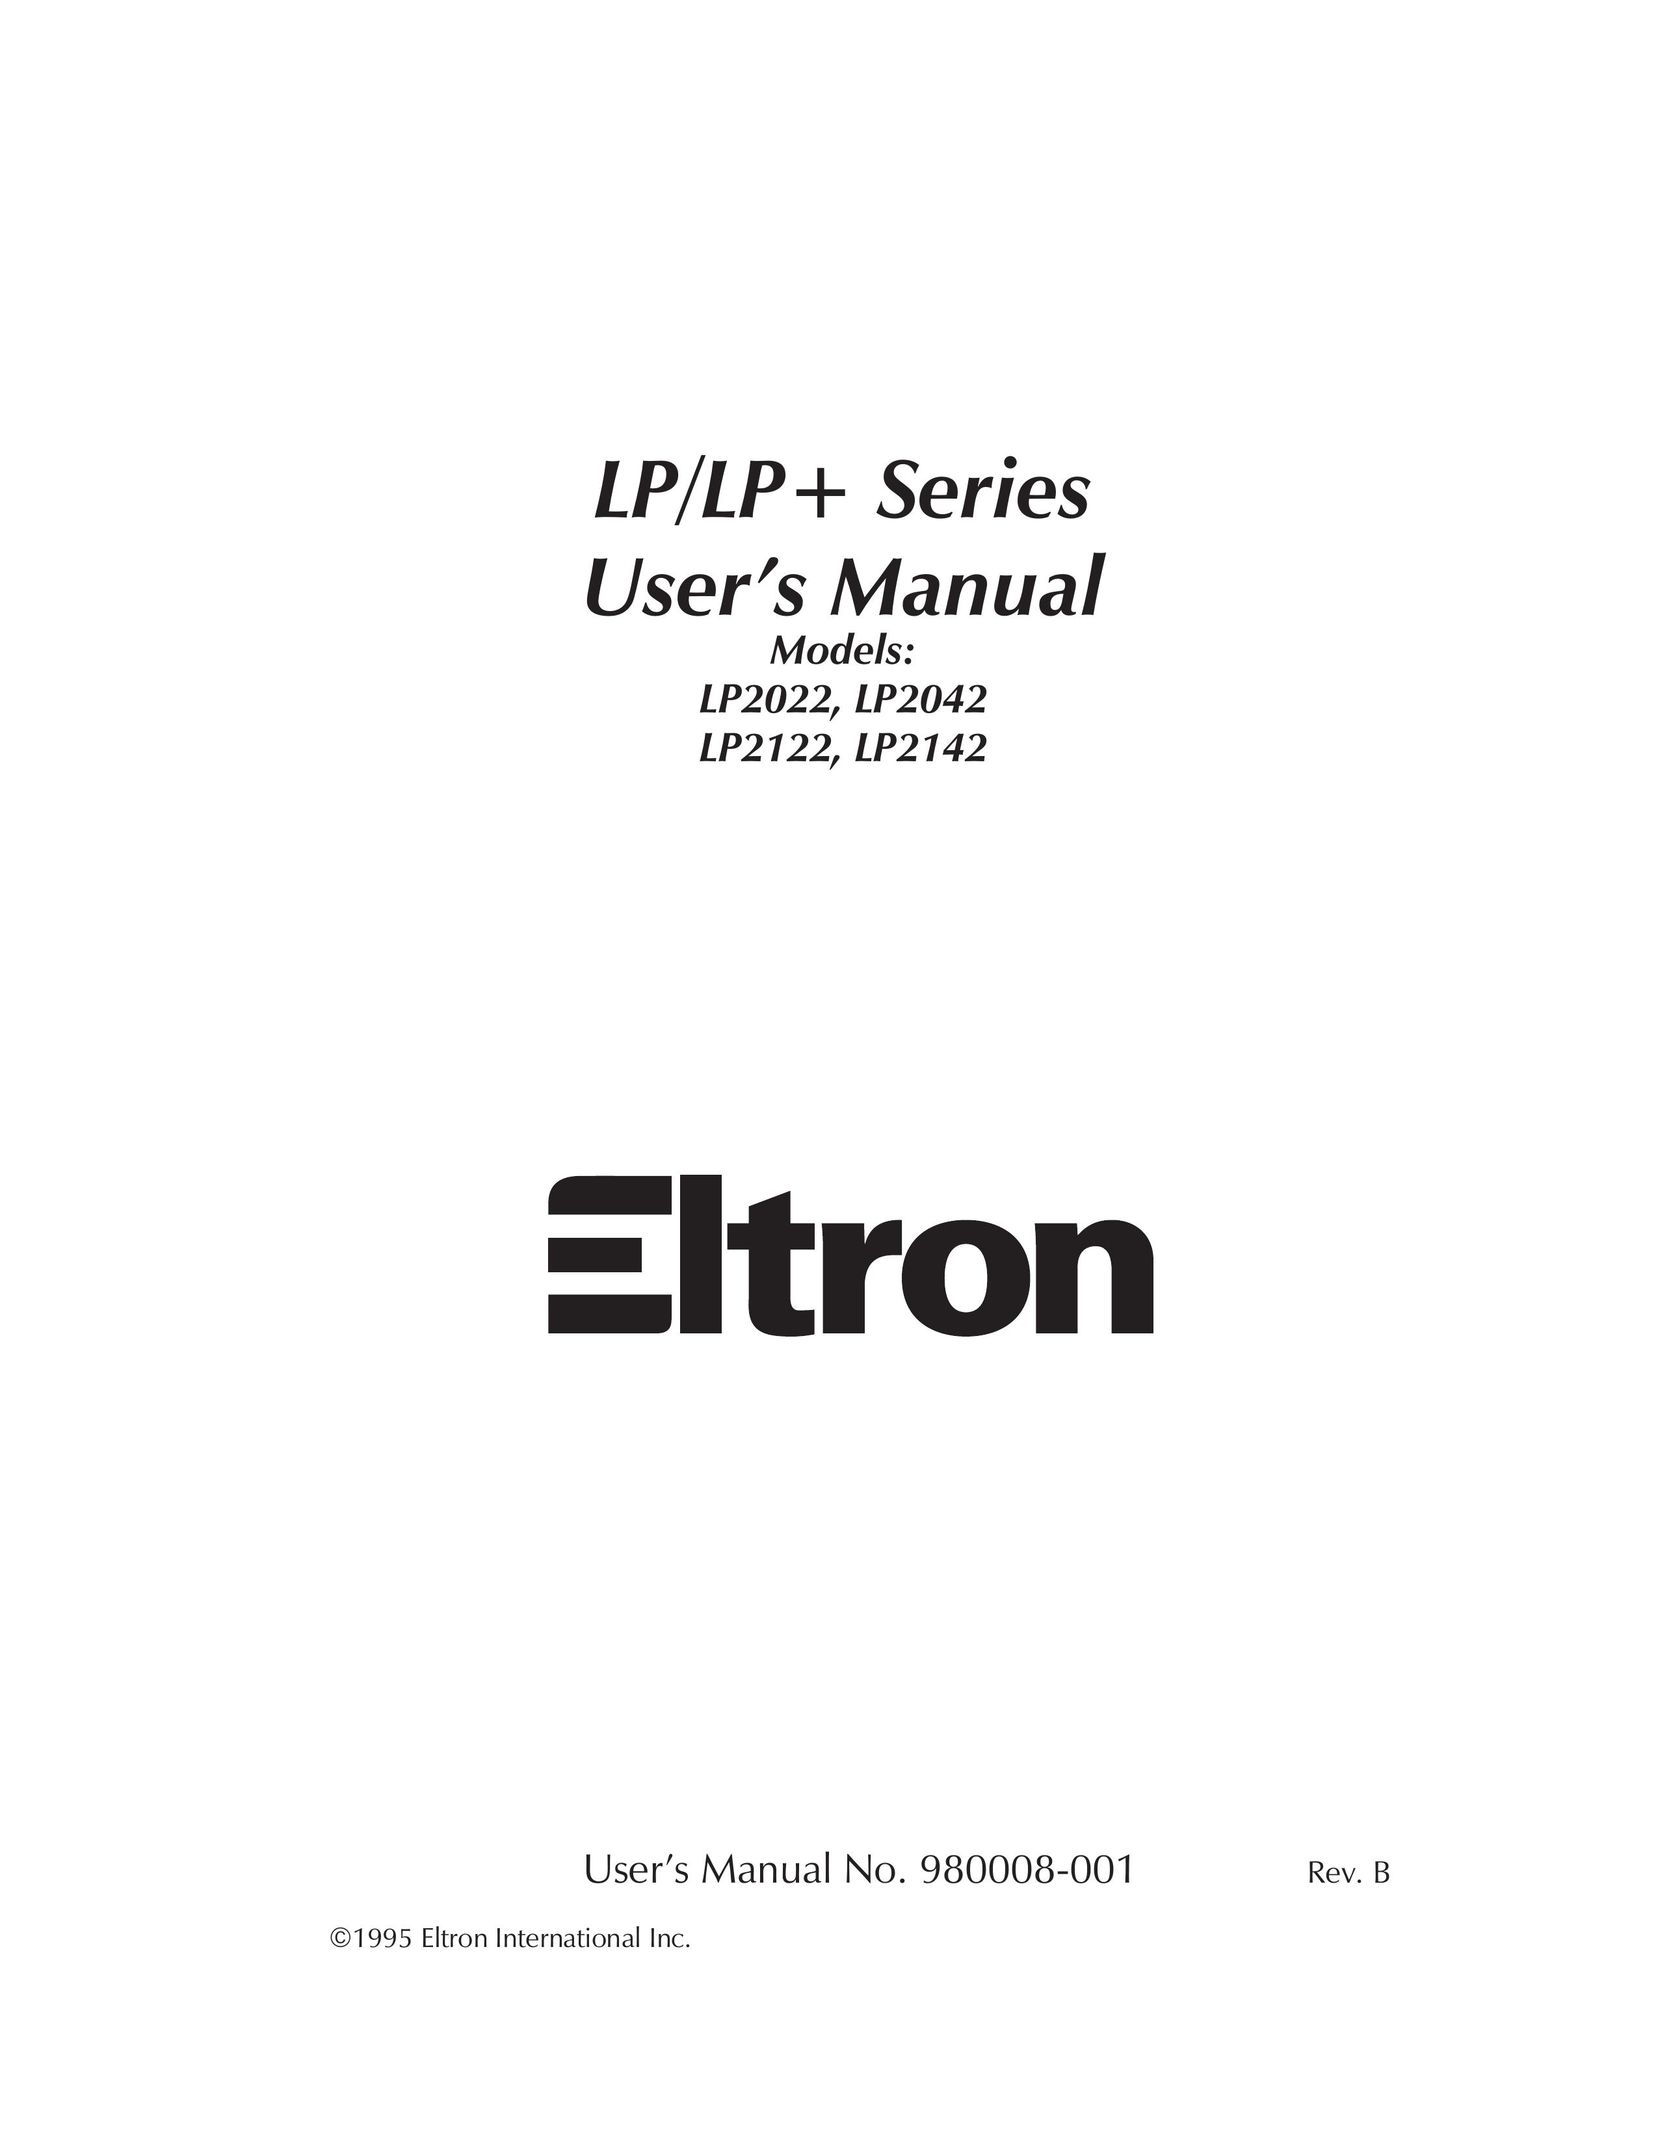 The Eltron Company LP2042 Printer User Manual